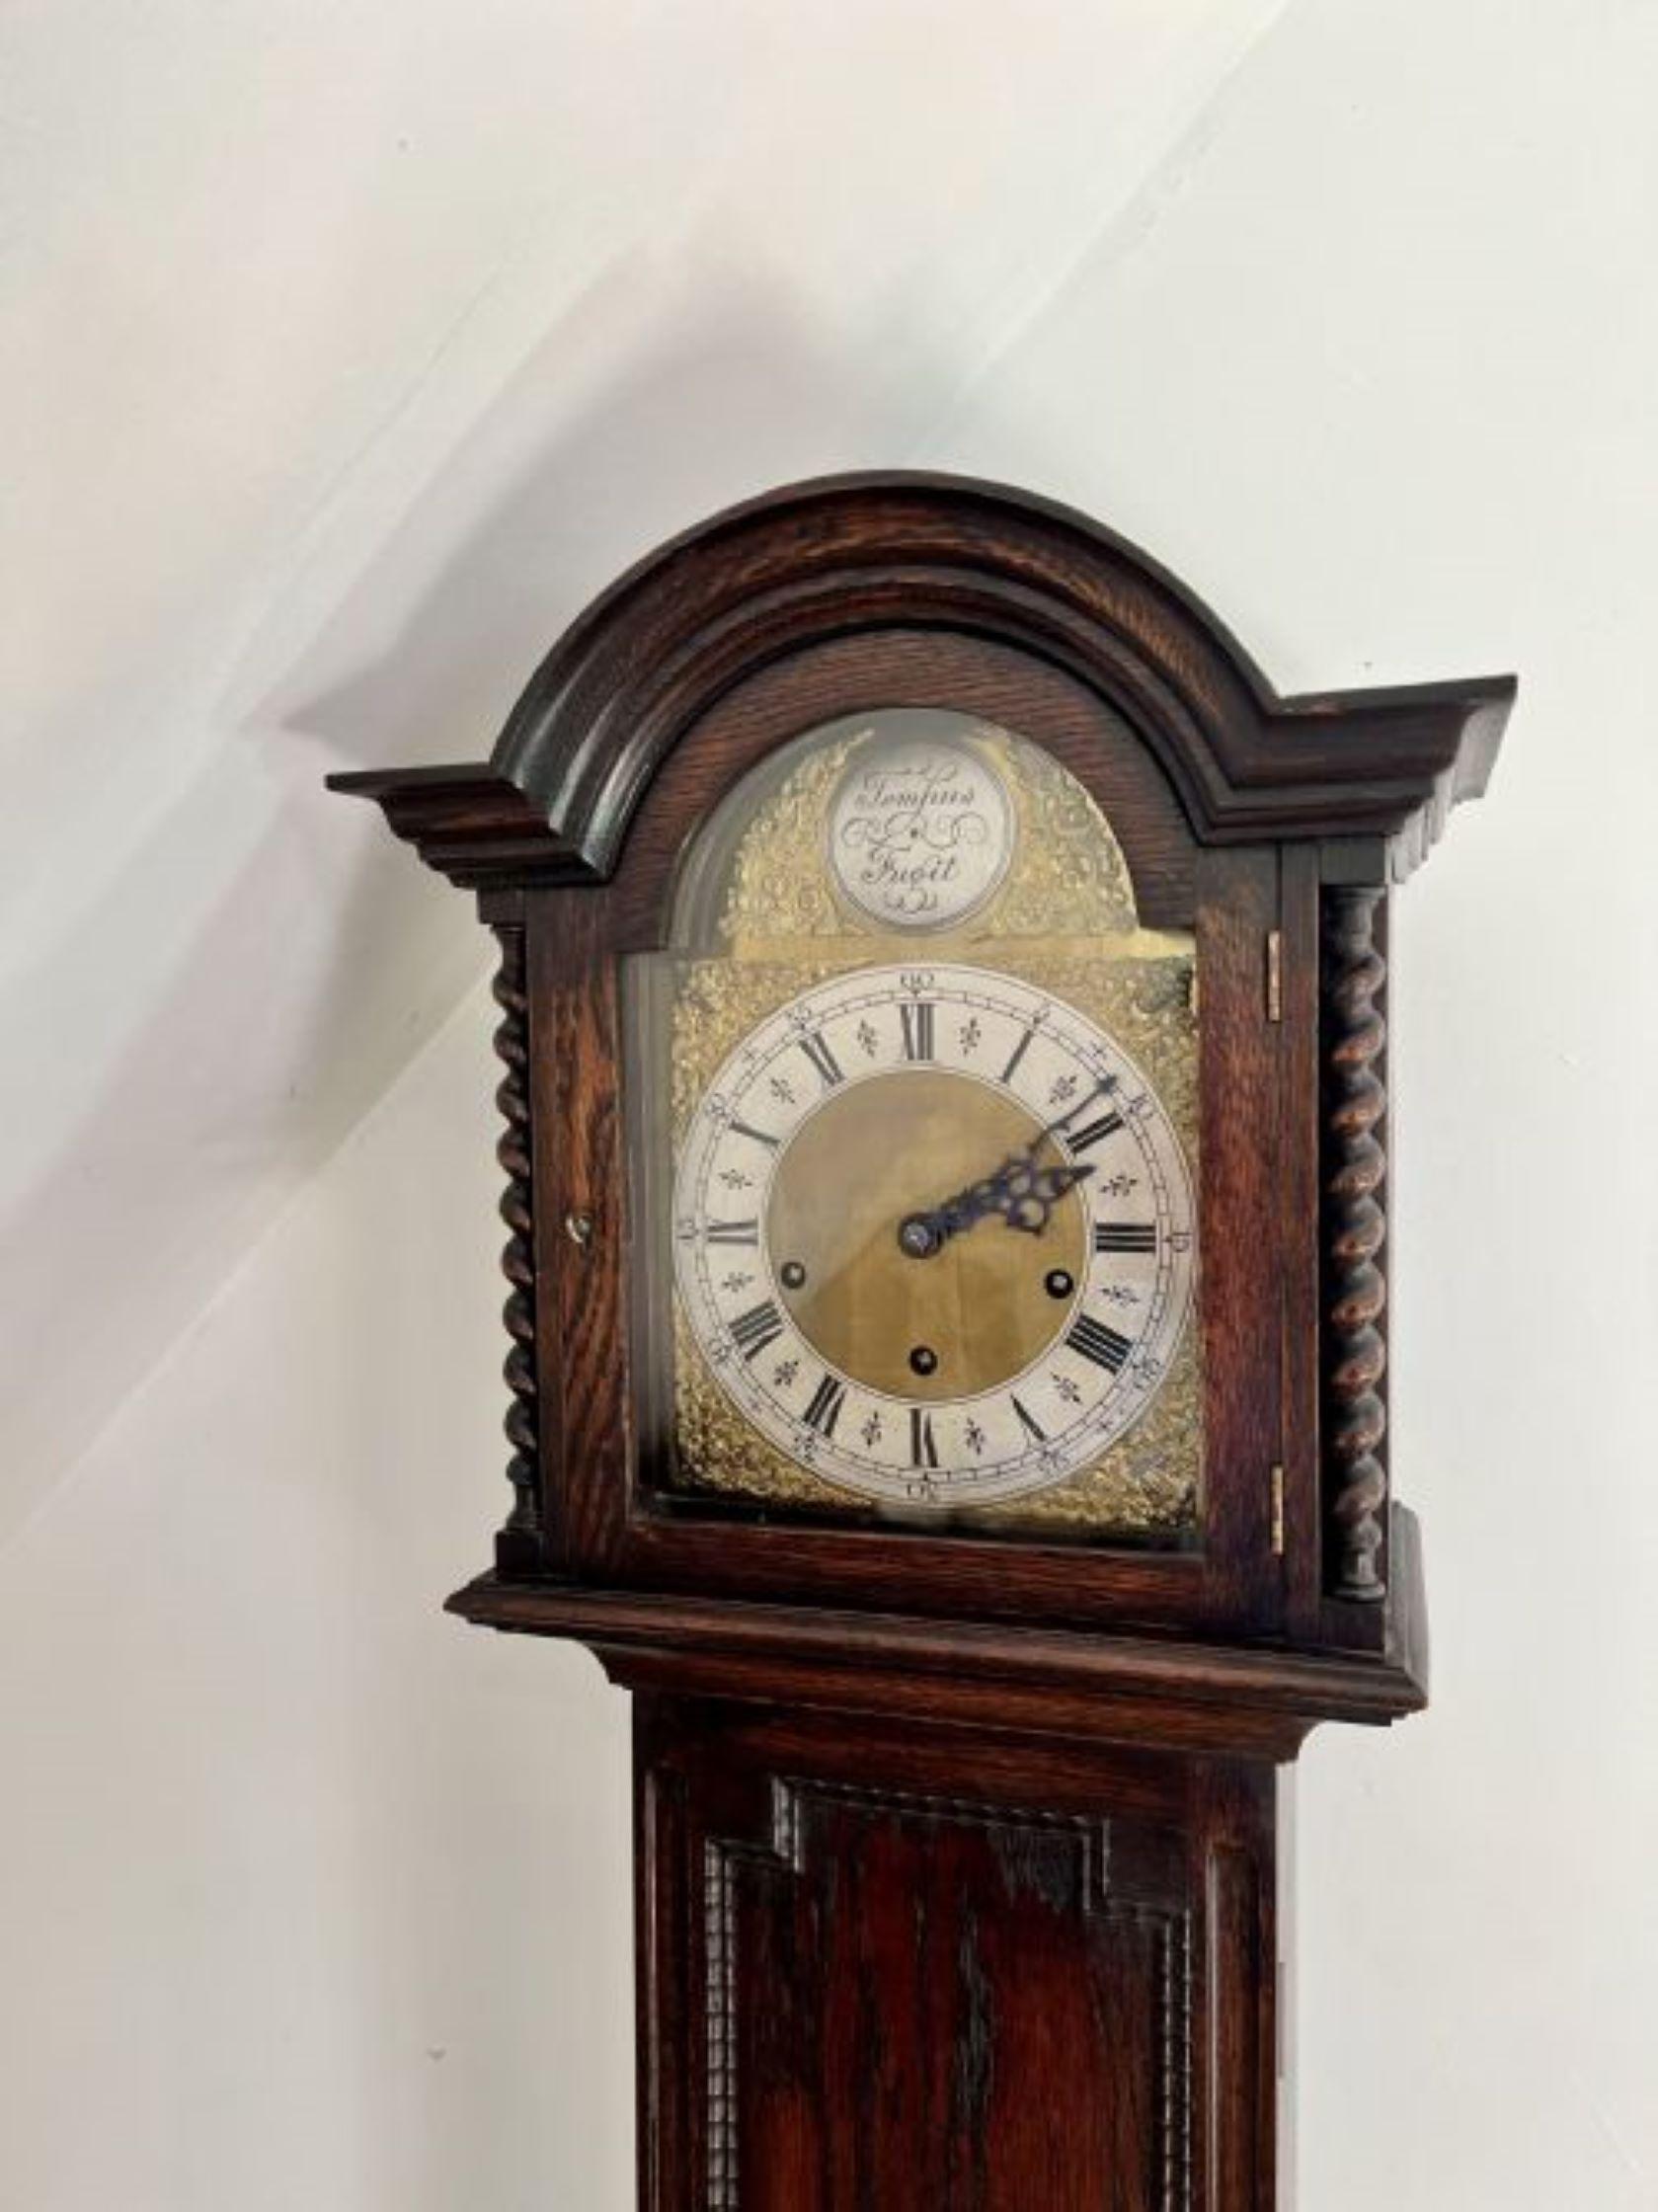 grandmother clock vs grandfather clock